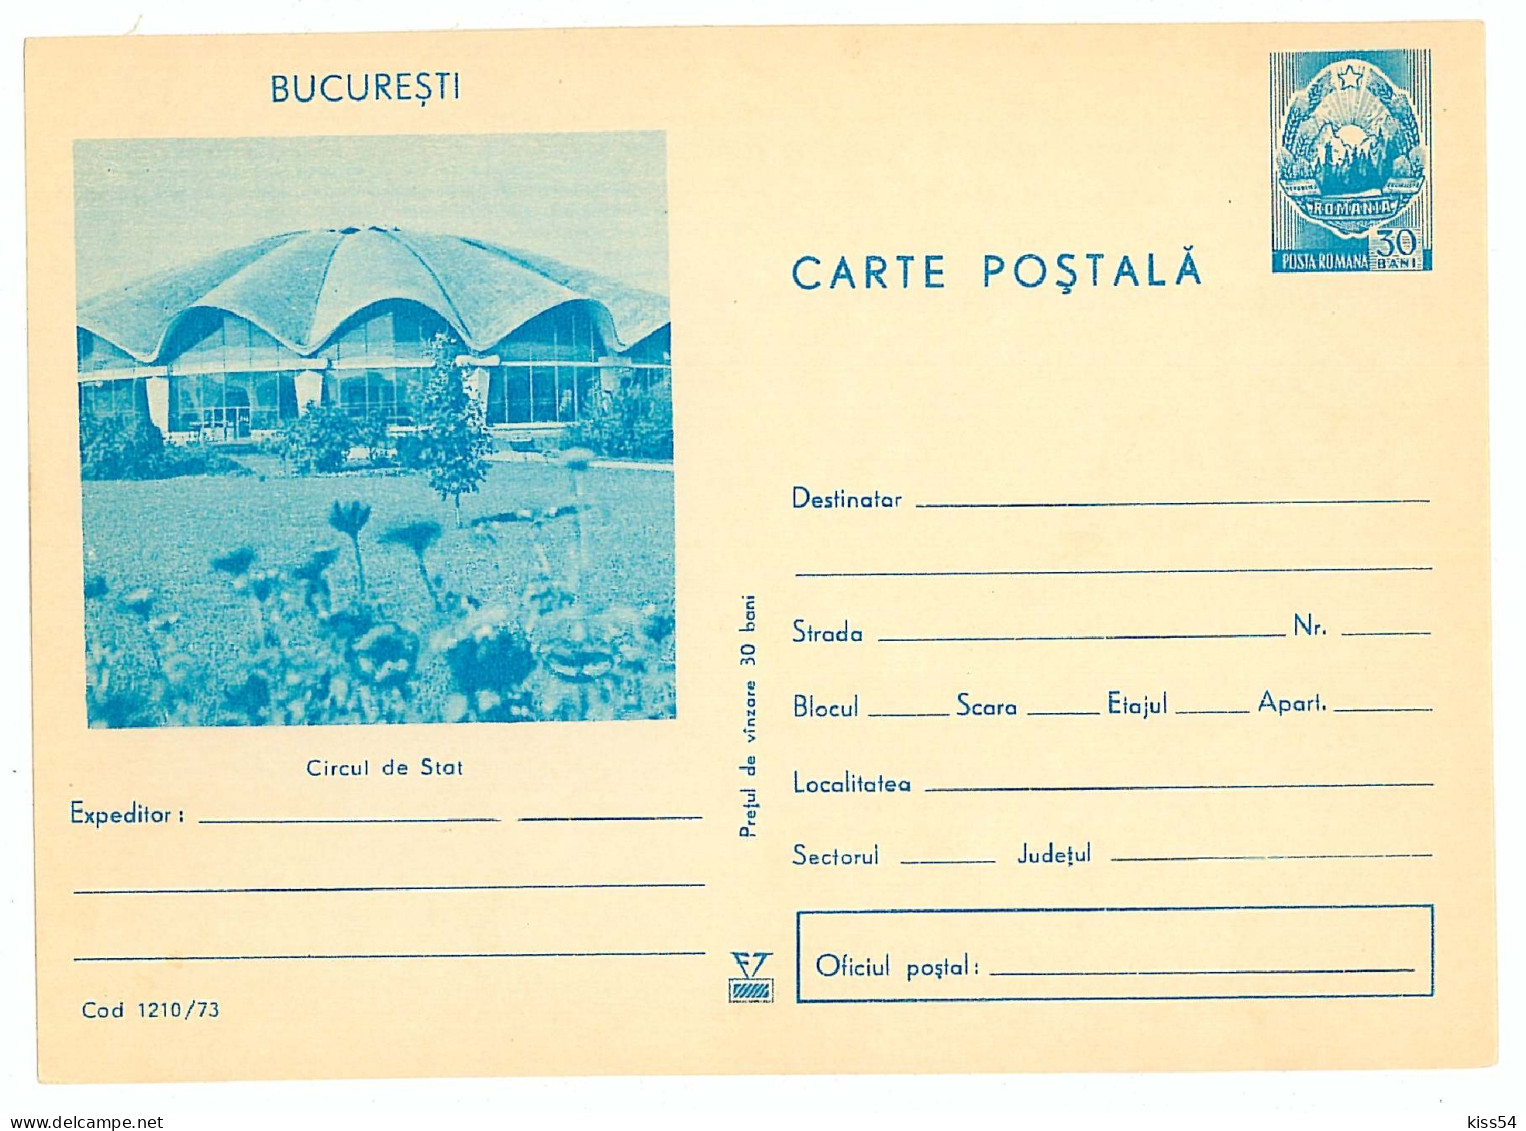 IP 73 - 1210 BUCURESTI, Romania, Circus - Stationery - Unused - 1973 - Ganzsachen